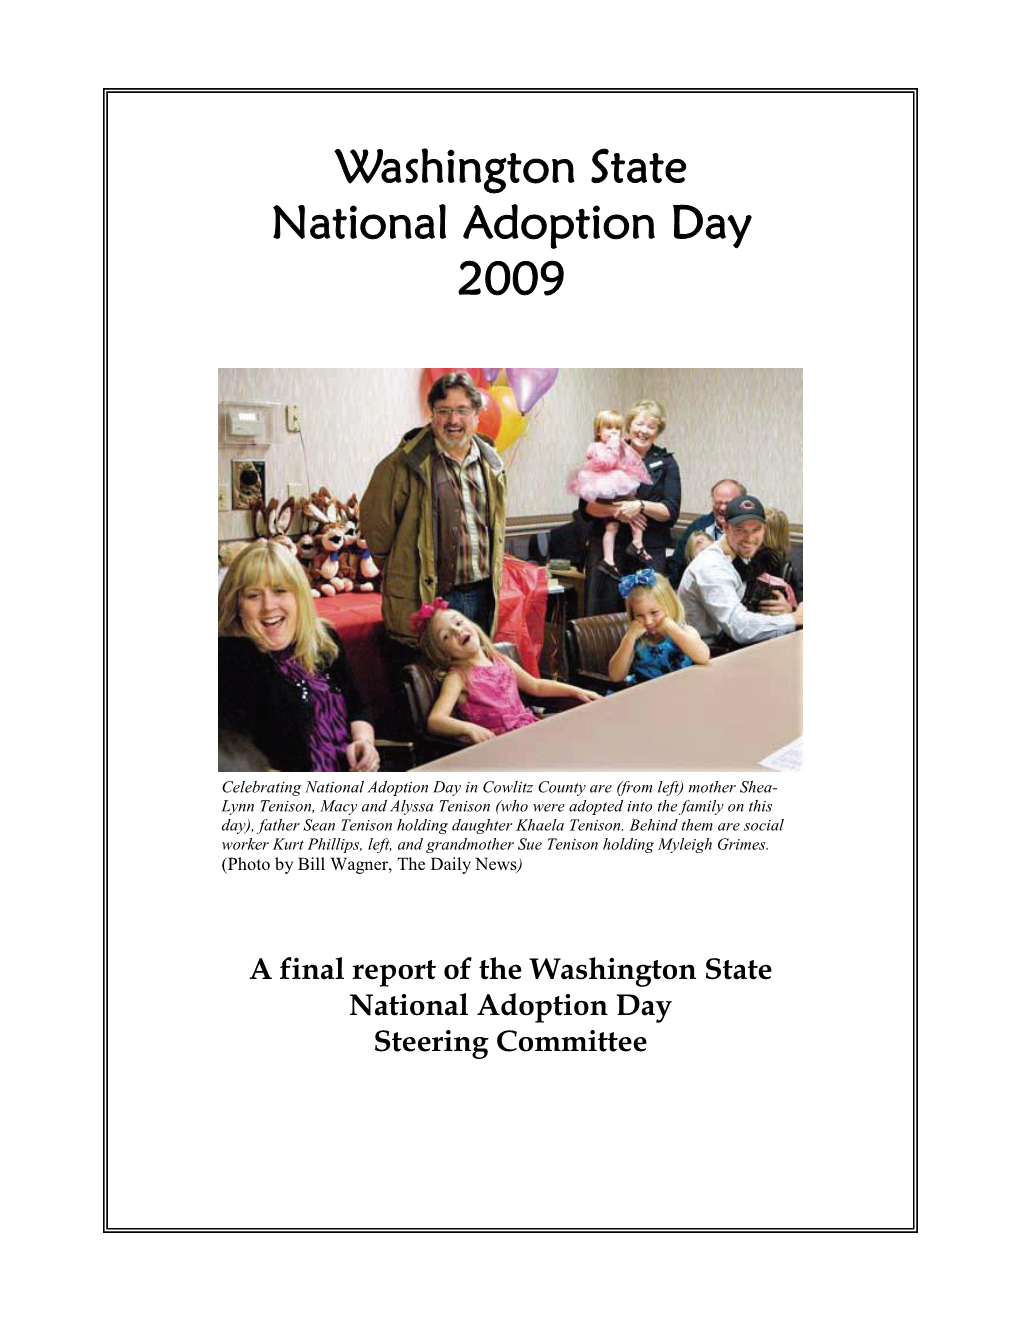 Washington State National Adoption Day 2009